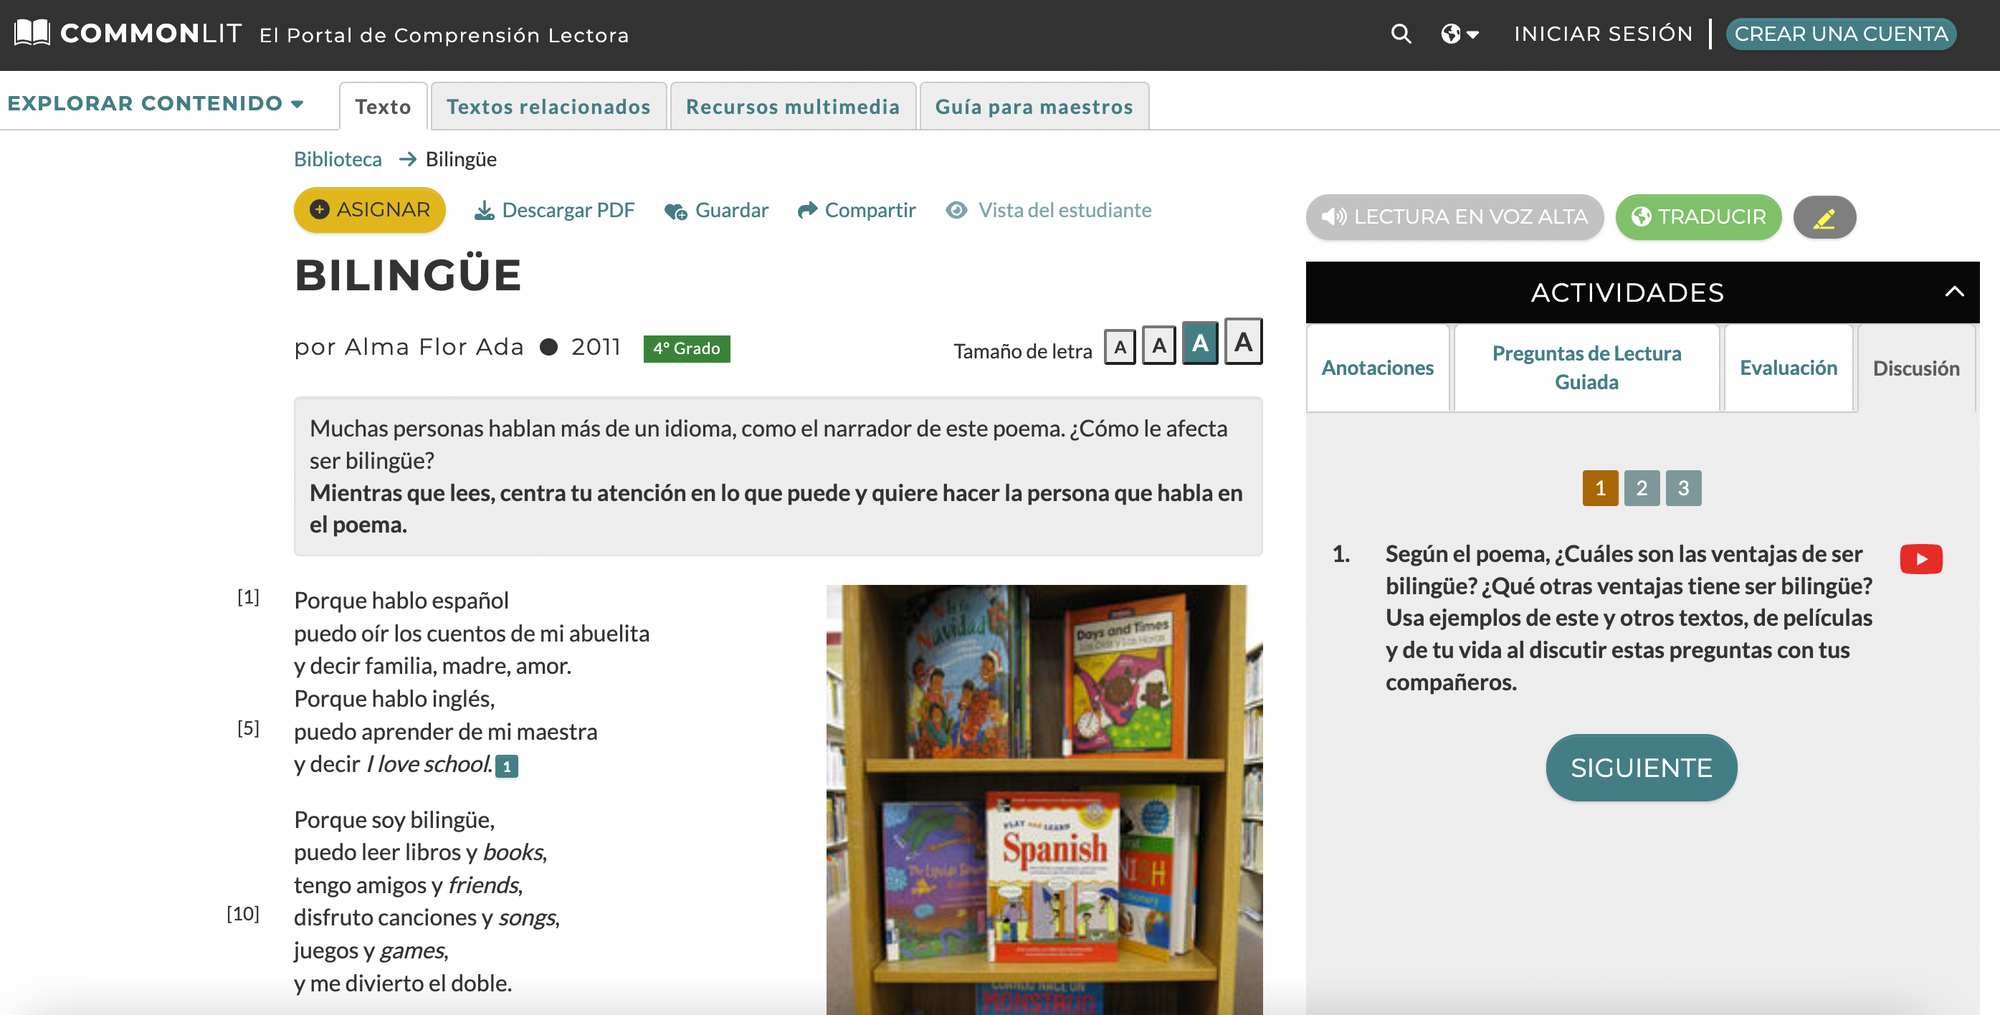 Imagen del texto Bilingue en la plataforma CommonLit.